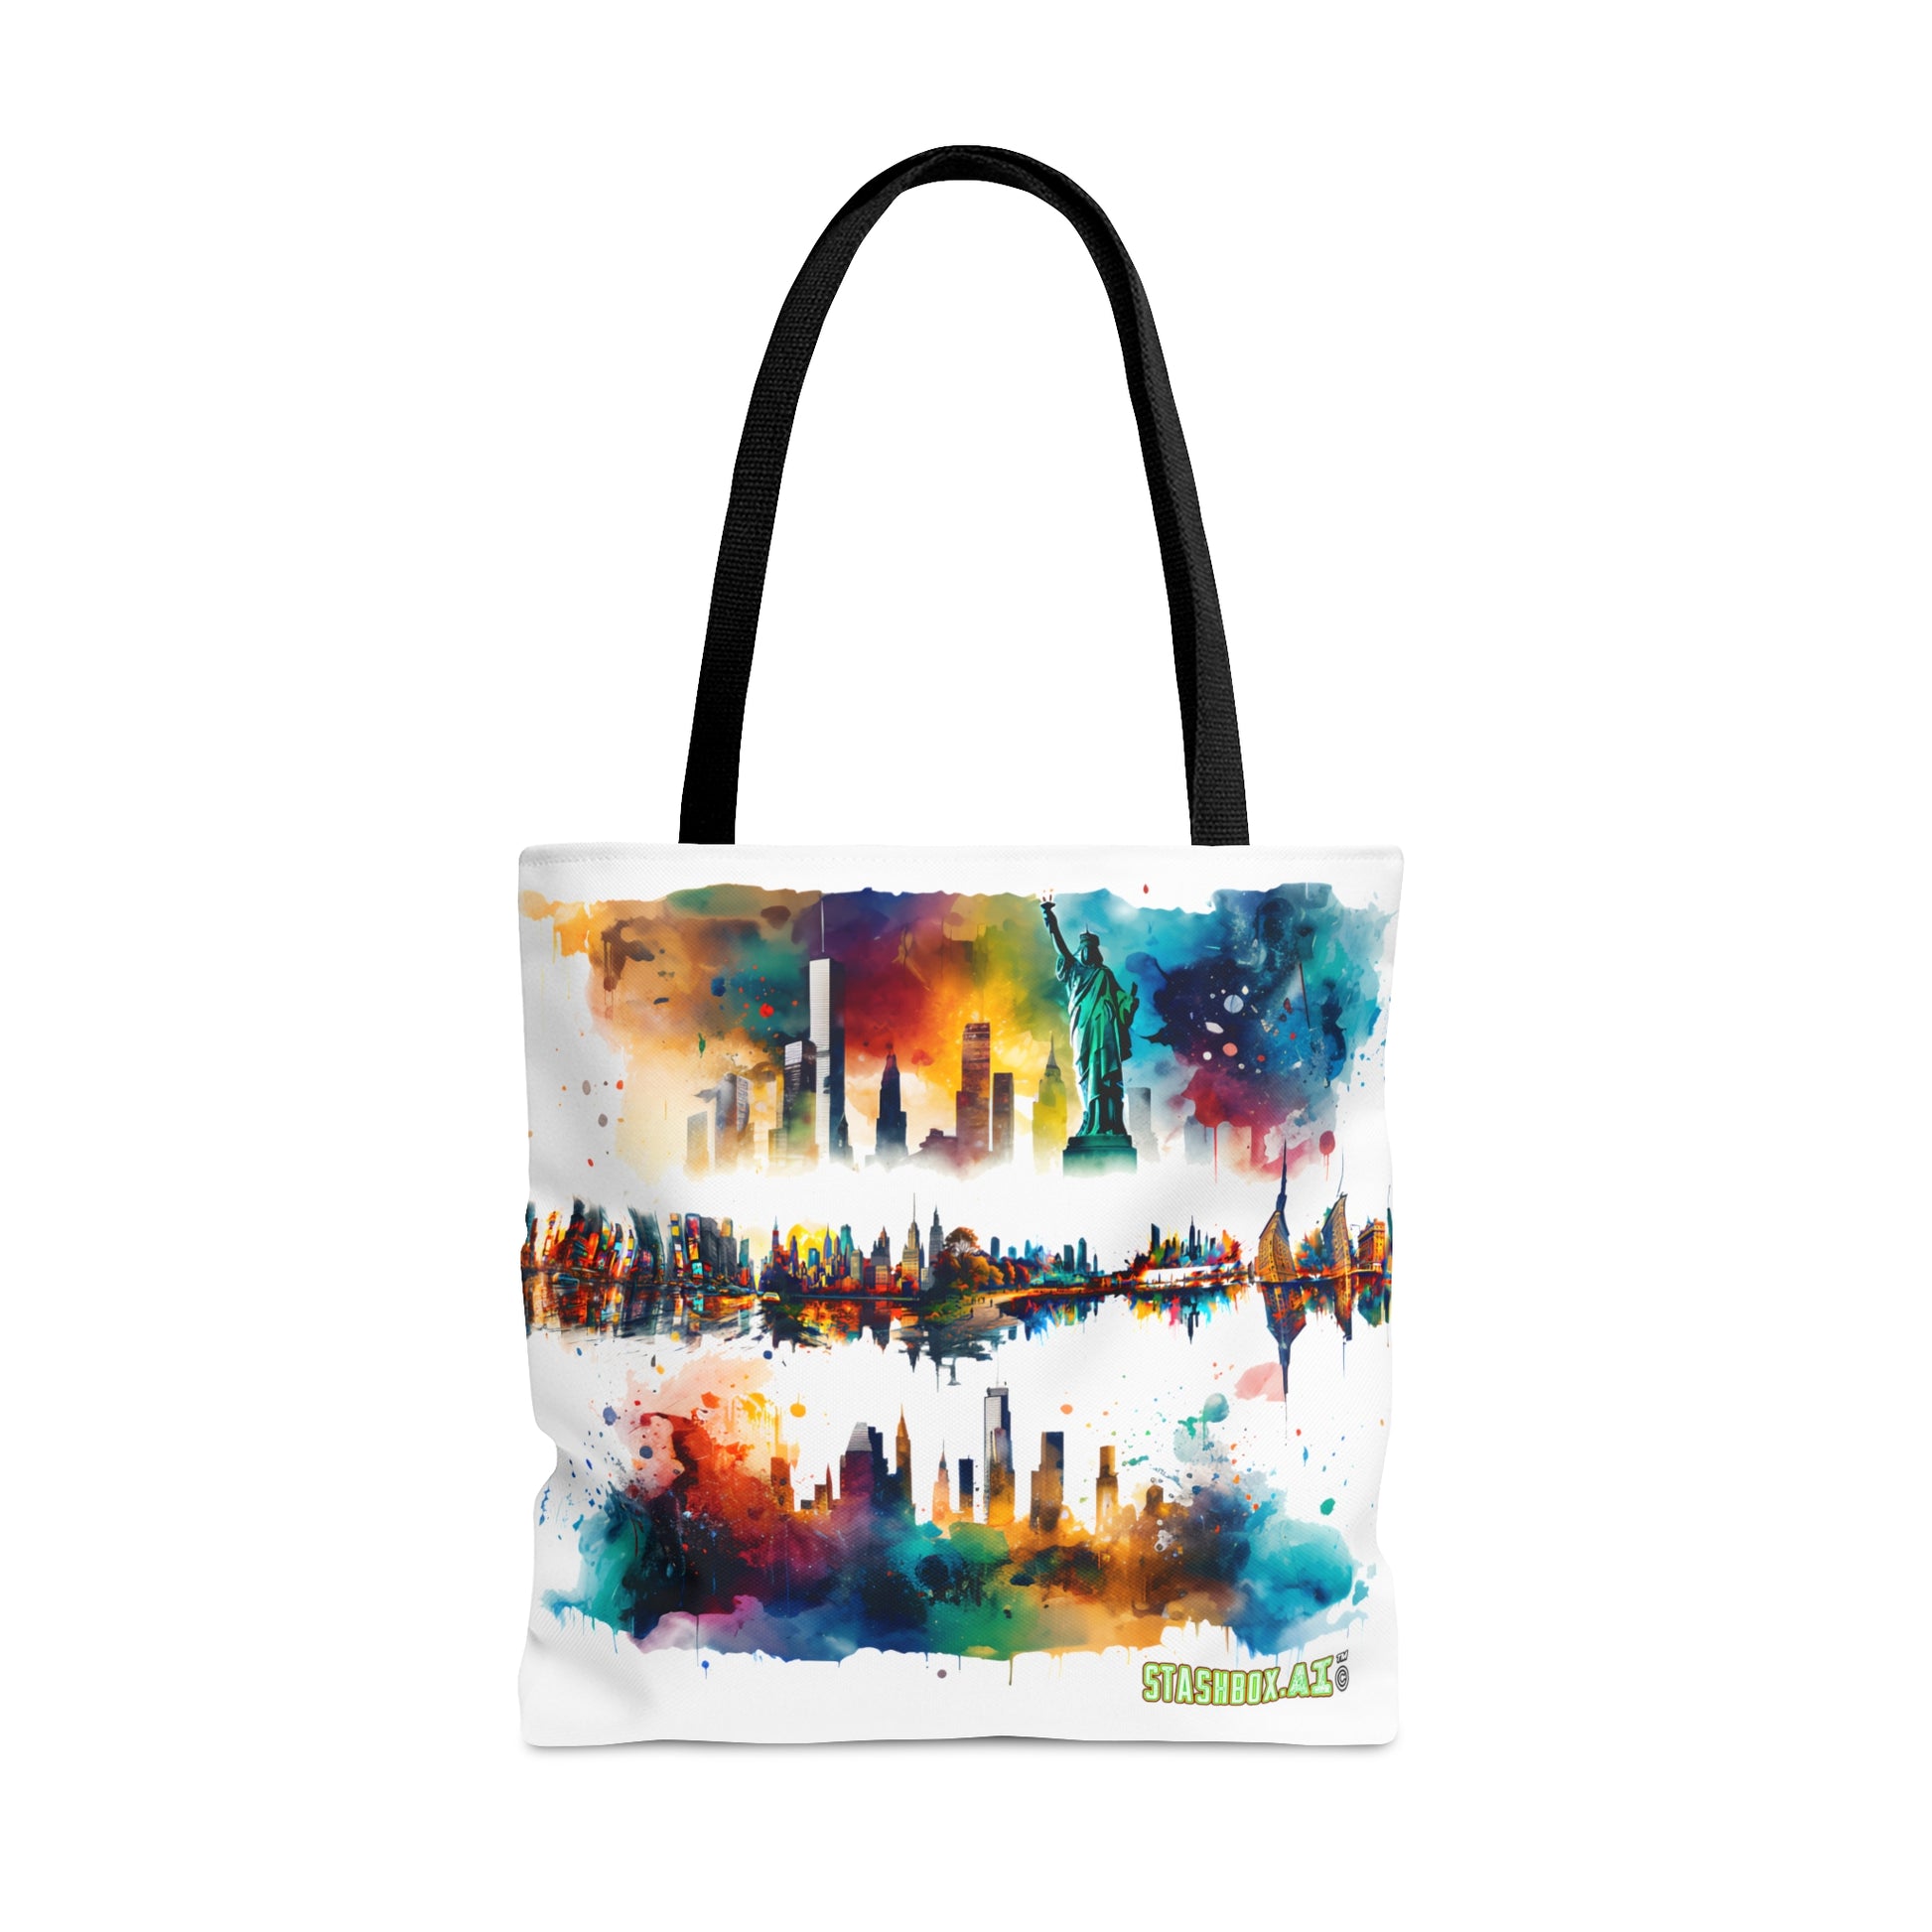 NYC Skyline Watercolor Tote - Stashbox Exclusive - #NYC #UrbanChic #CityscapeDesign #StashboxArt #FashionStatement